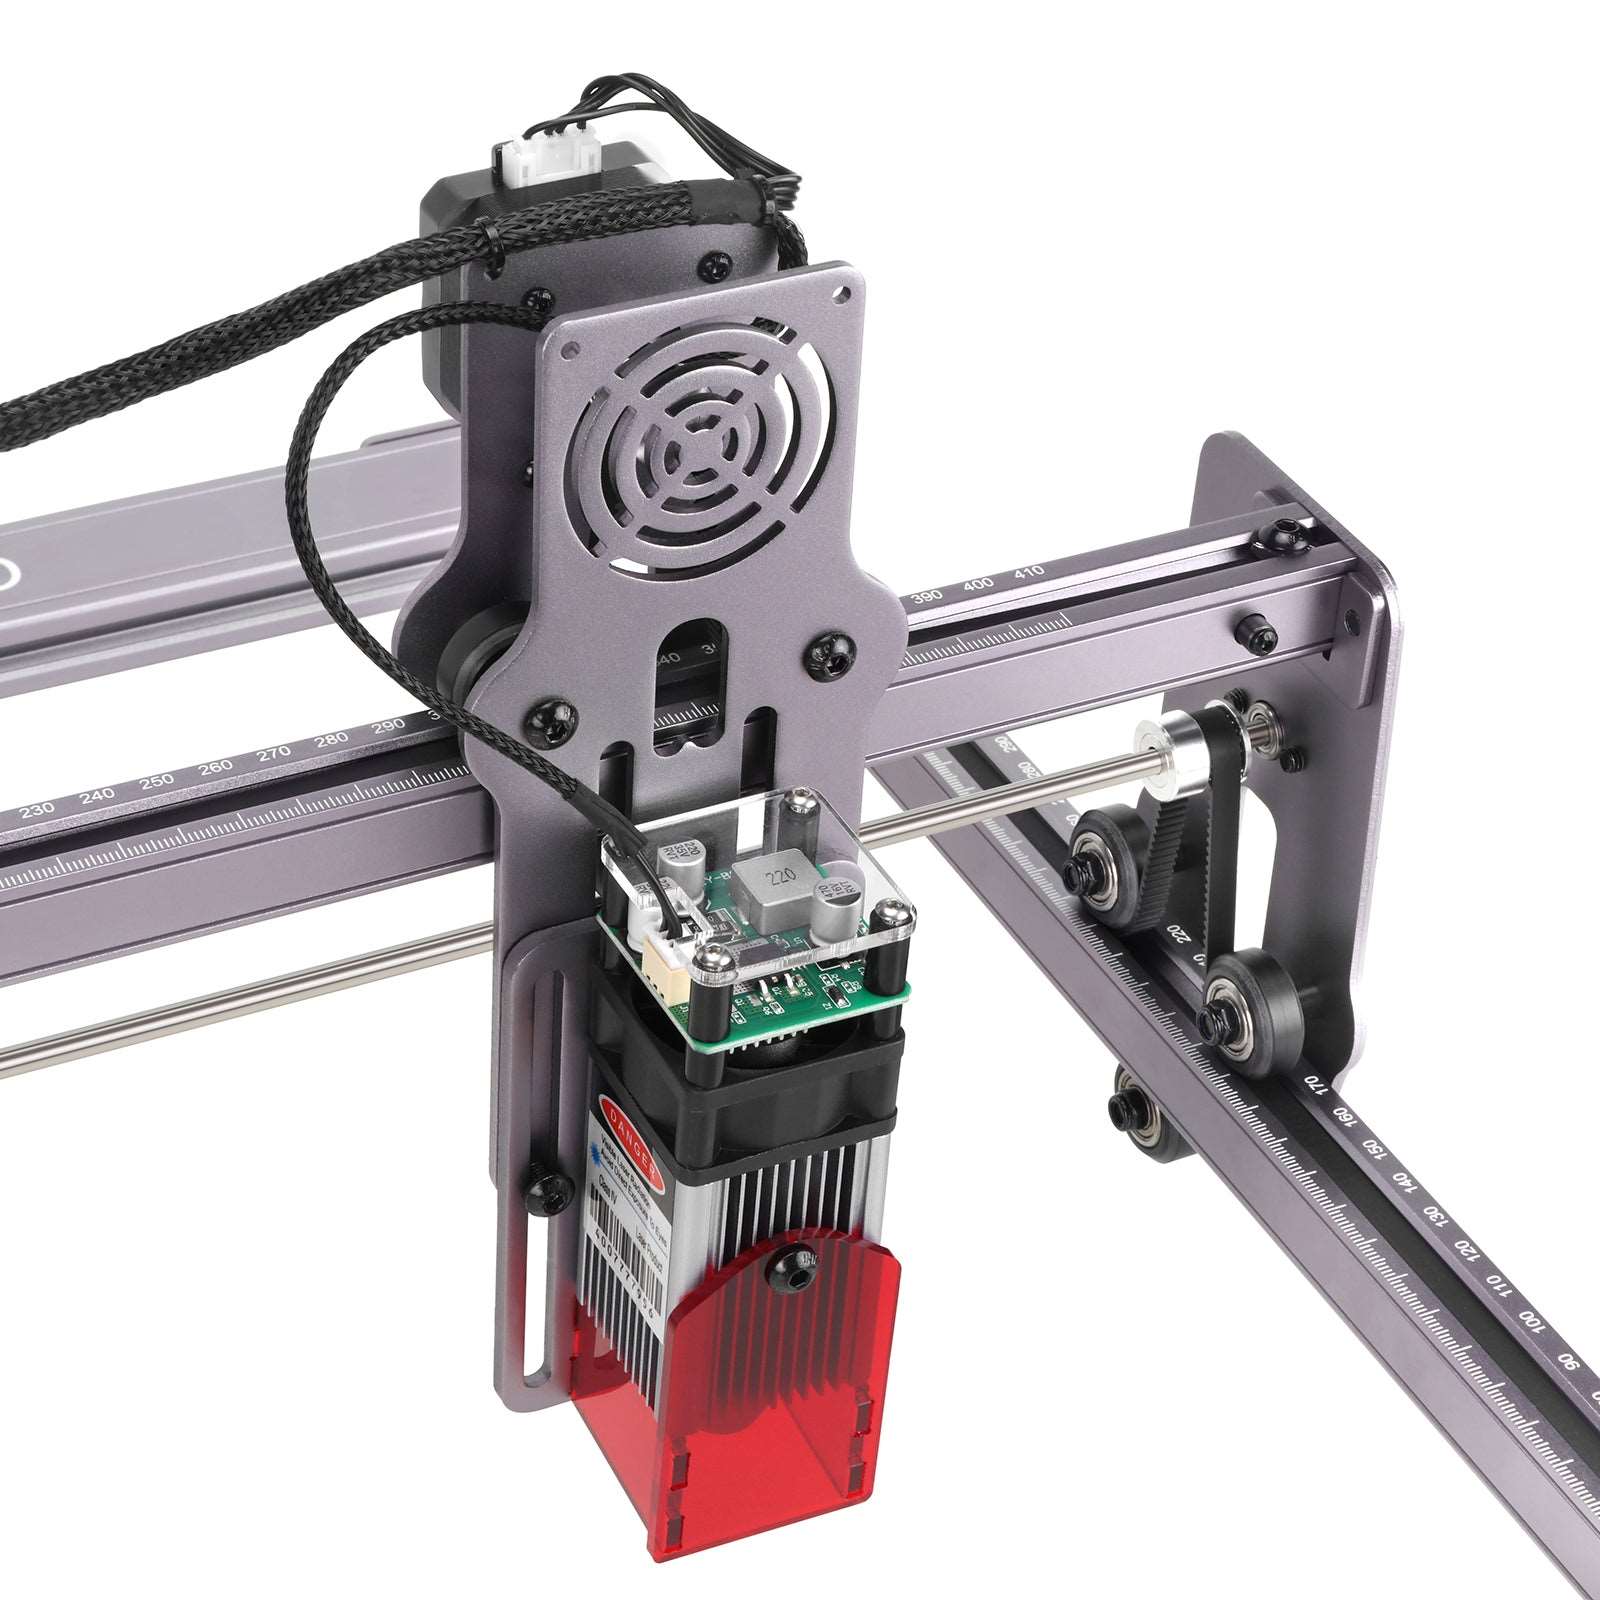 ATOMSTACK A5 PRO 40W Laser Engraving Machine DIY Engraver Cutter Printer  41*40cm